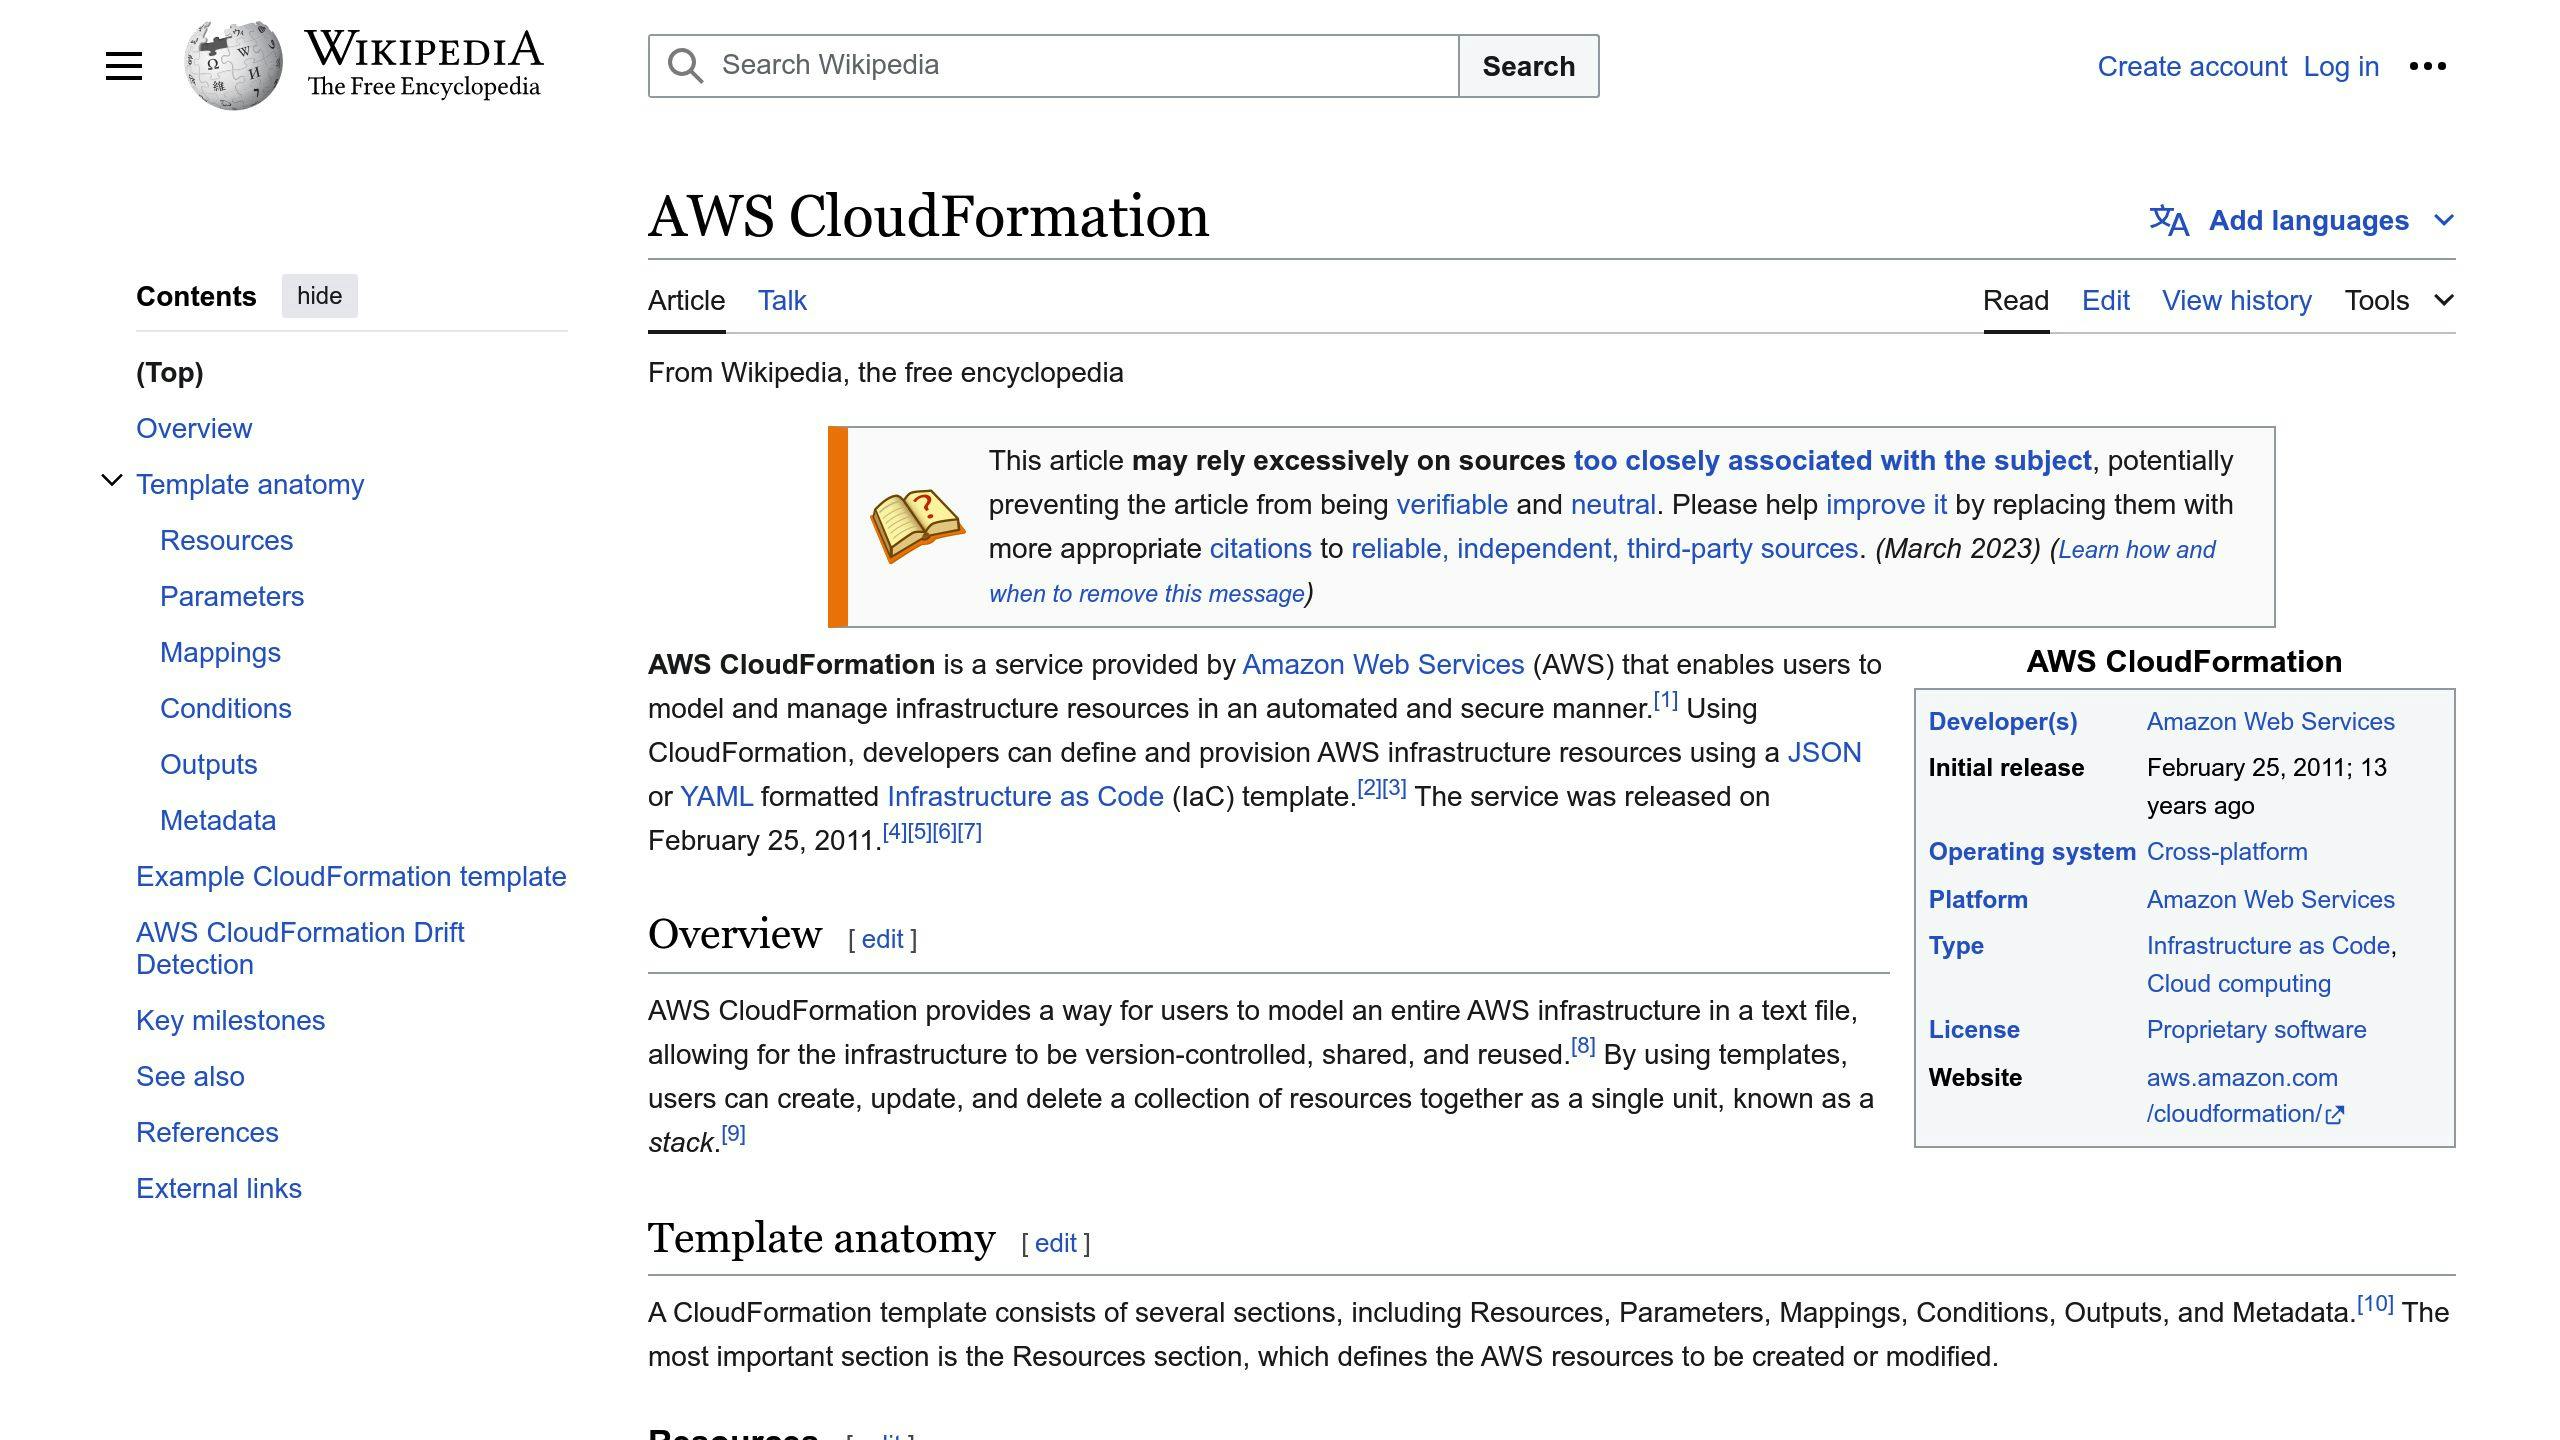 AWS CloudFormation